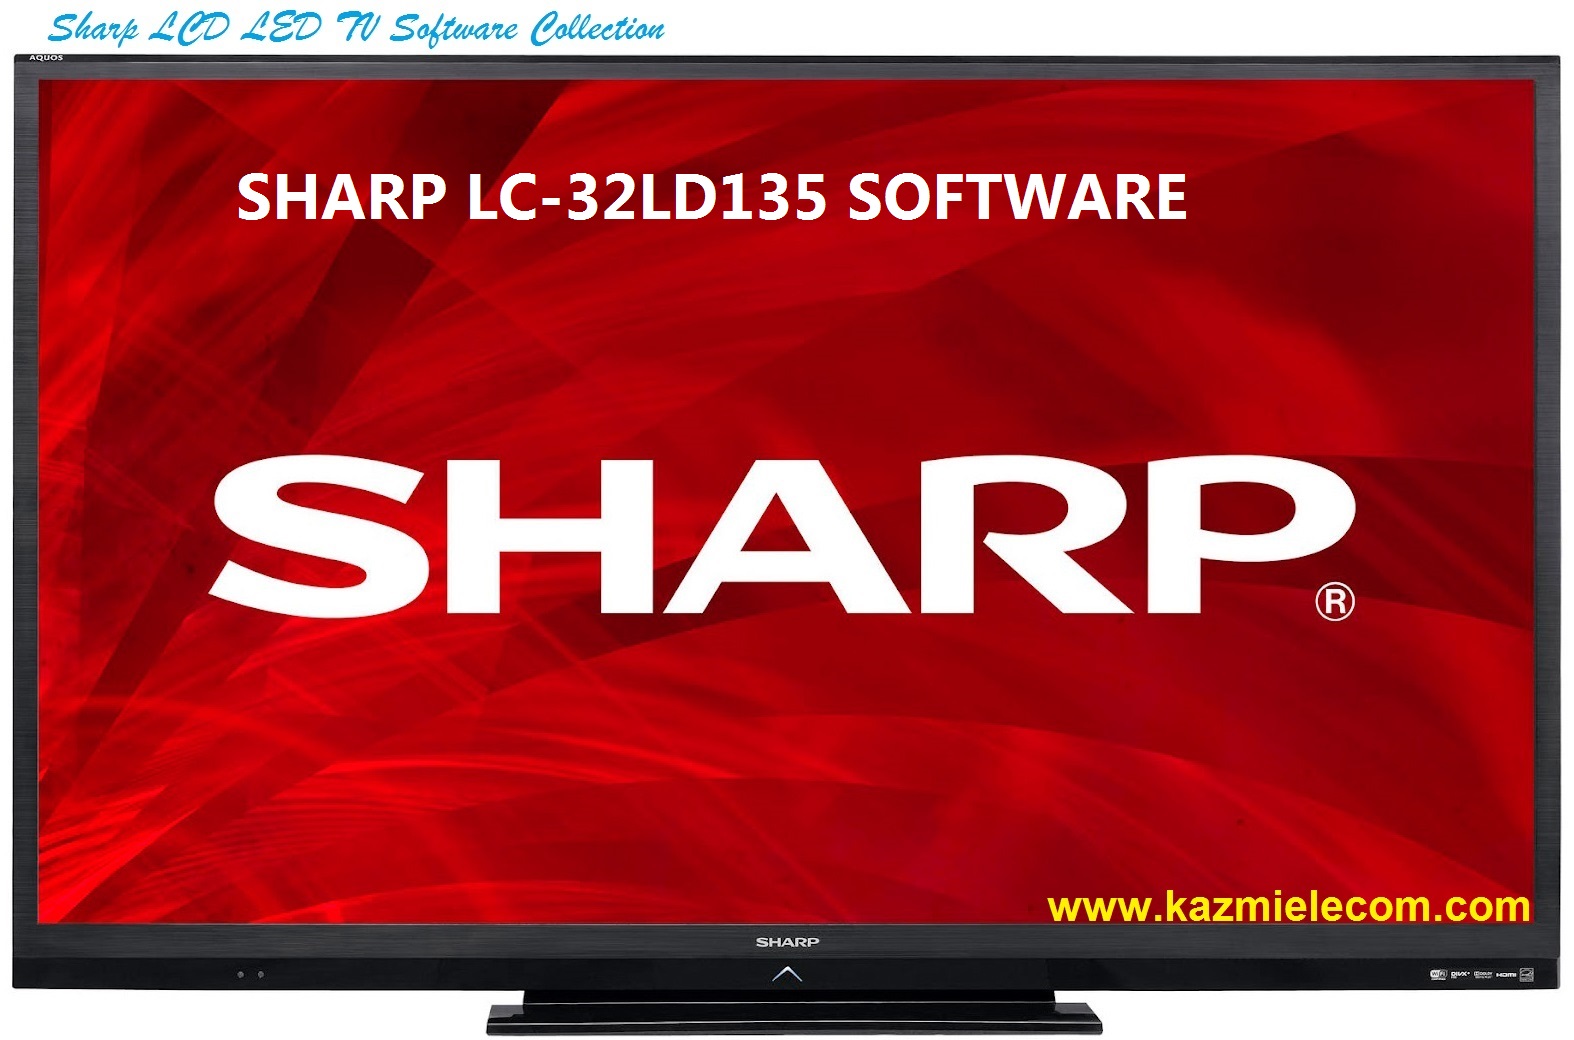 Sharp Lc-32Ld135